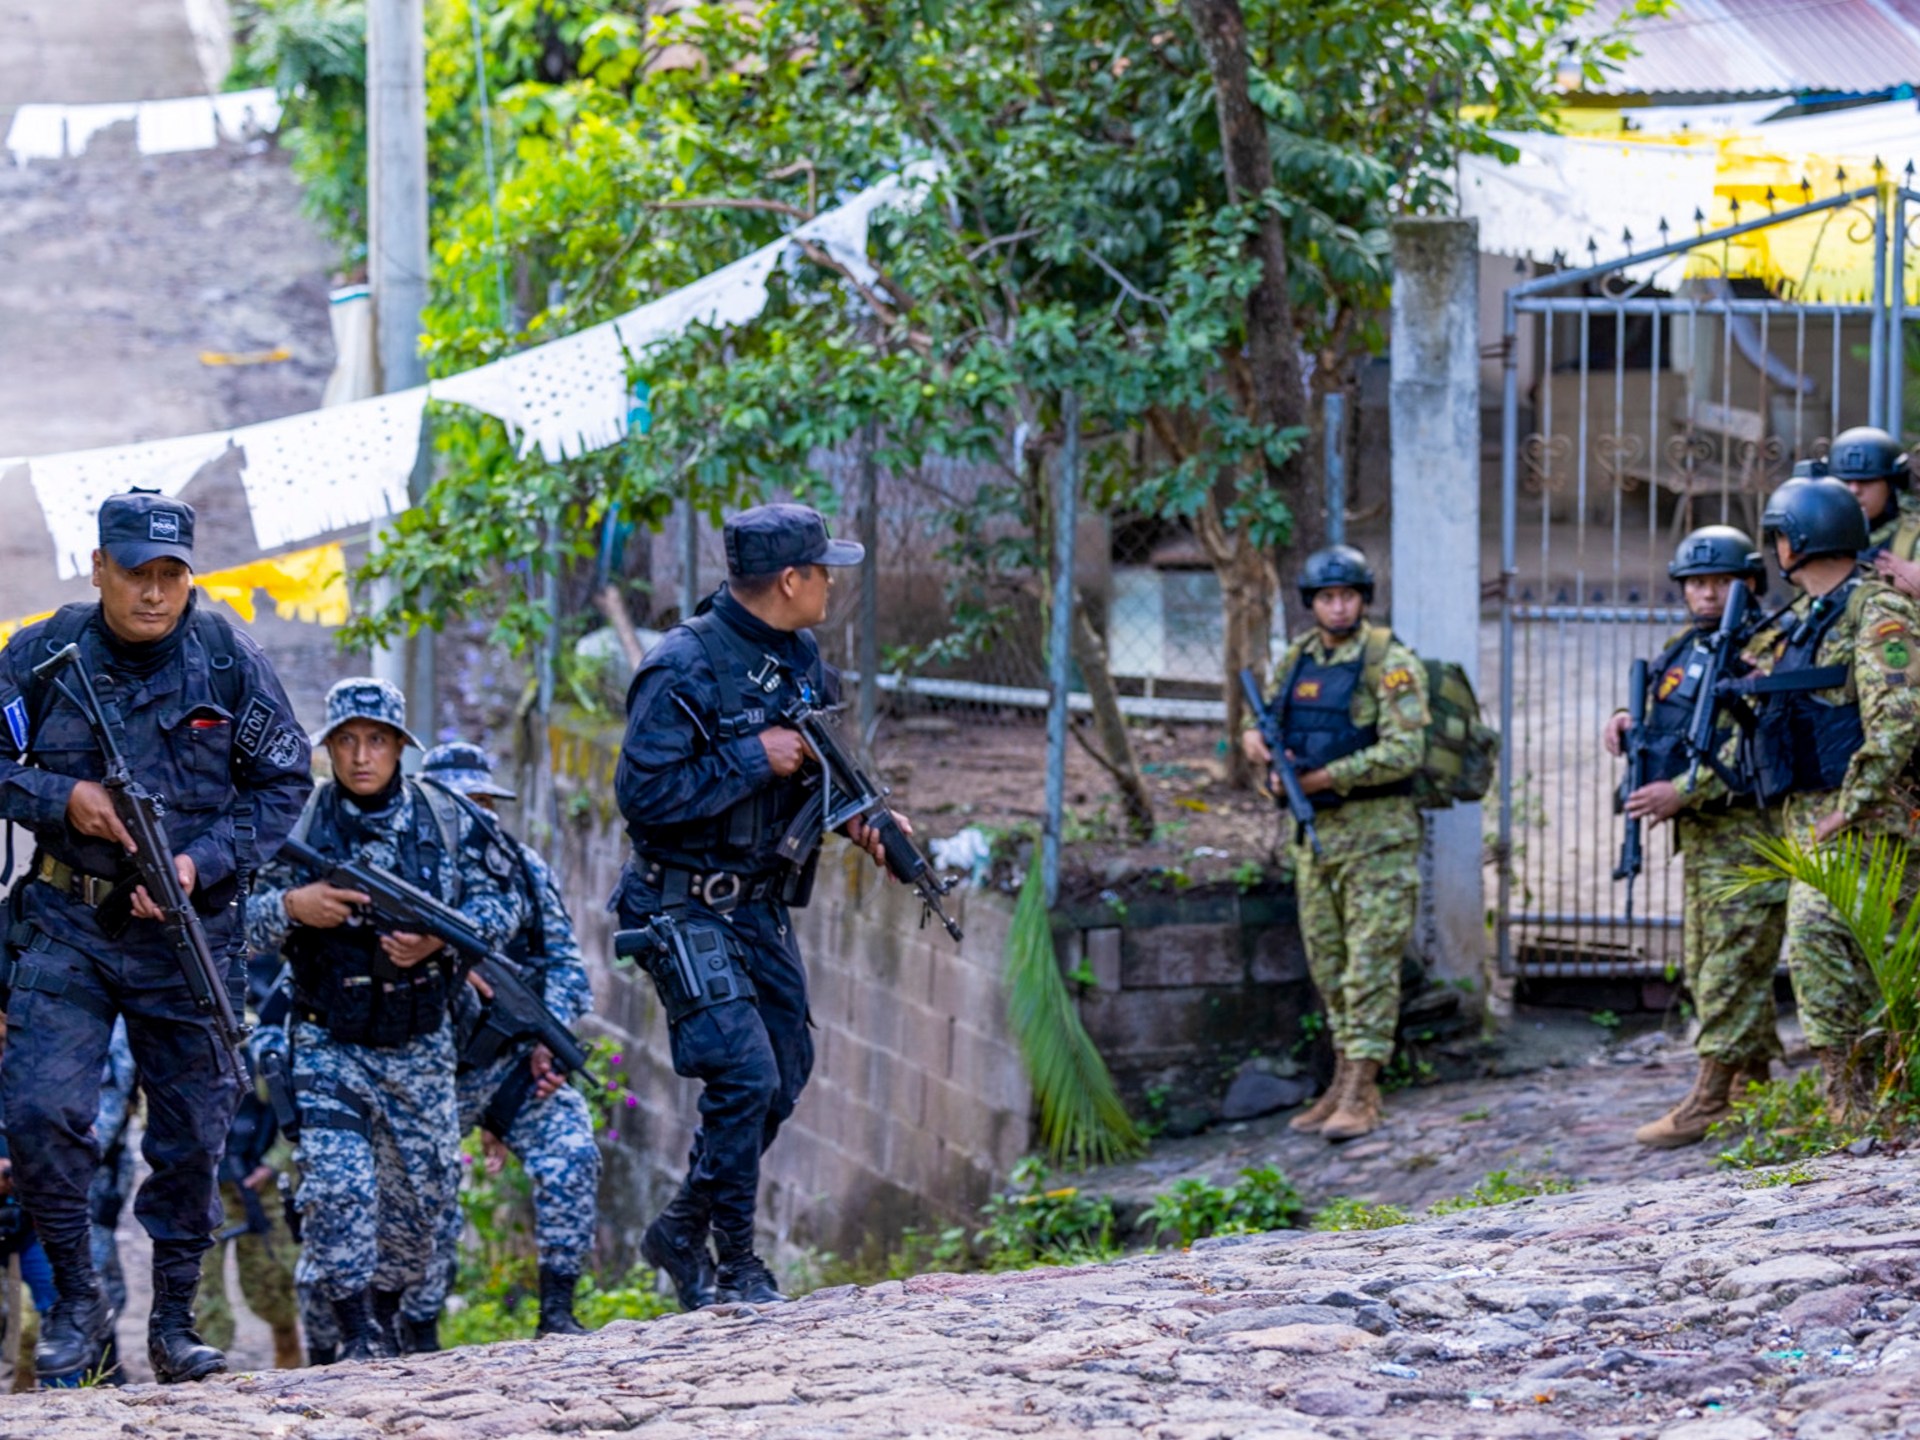 El Salvador mengirim 8.000 tentara, polisi ke provinsi pedesaan dalam penumpasan geng |  Berita